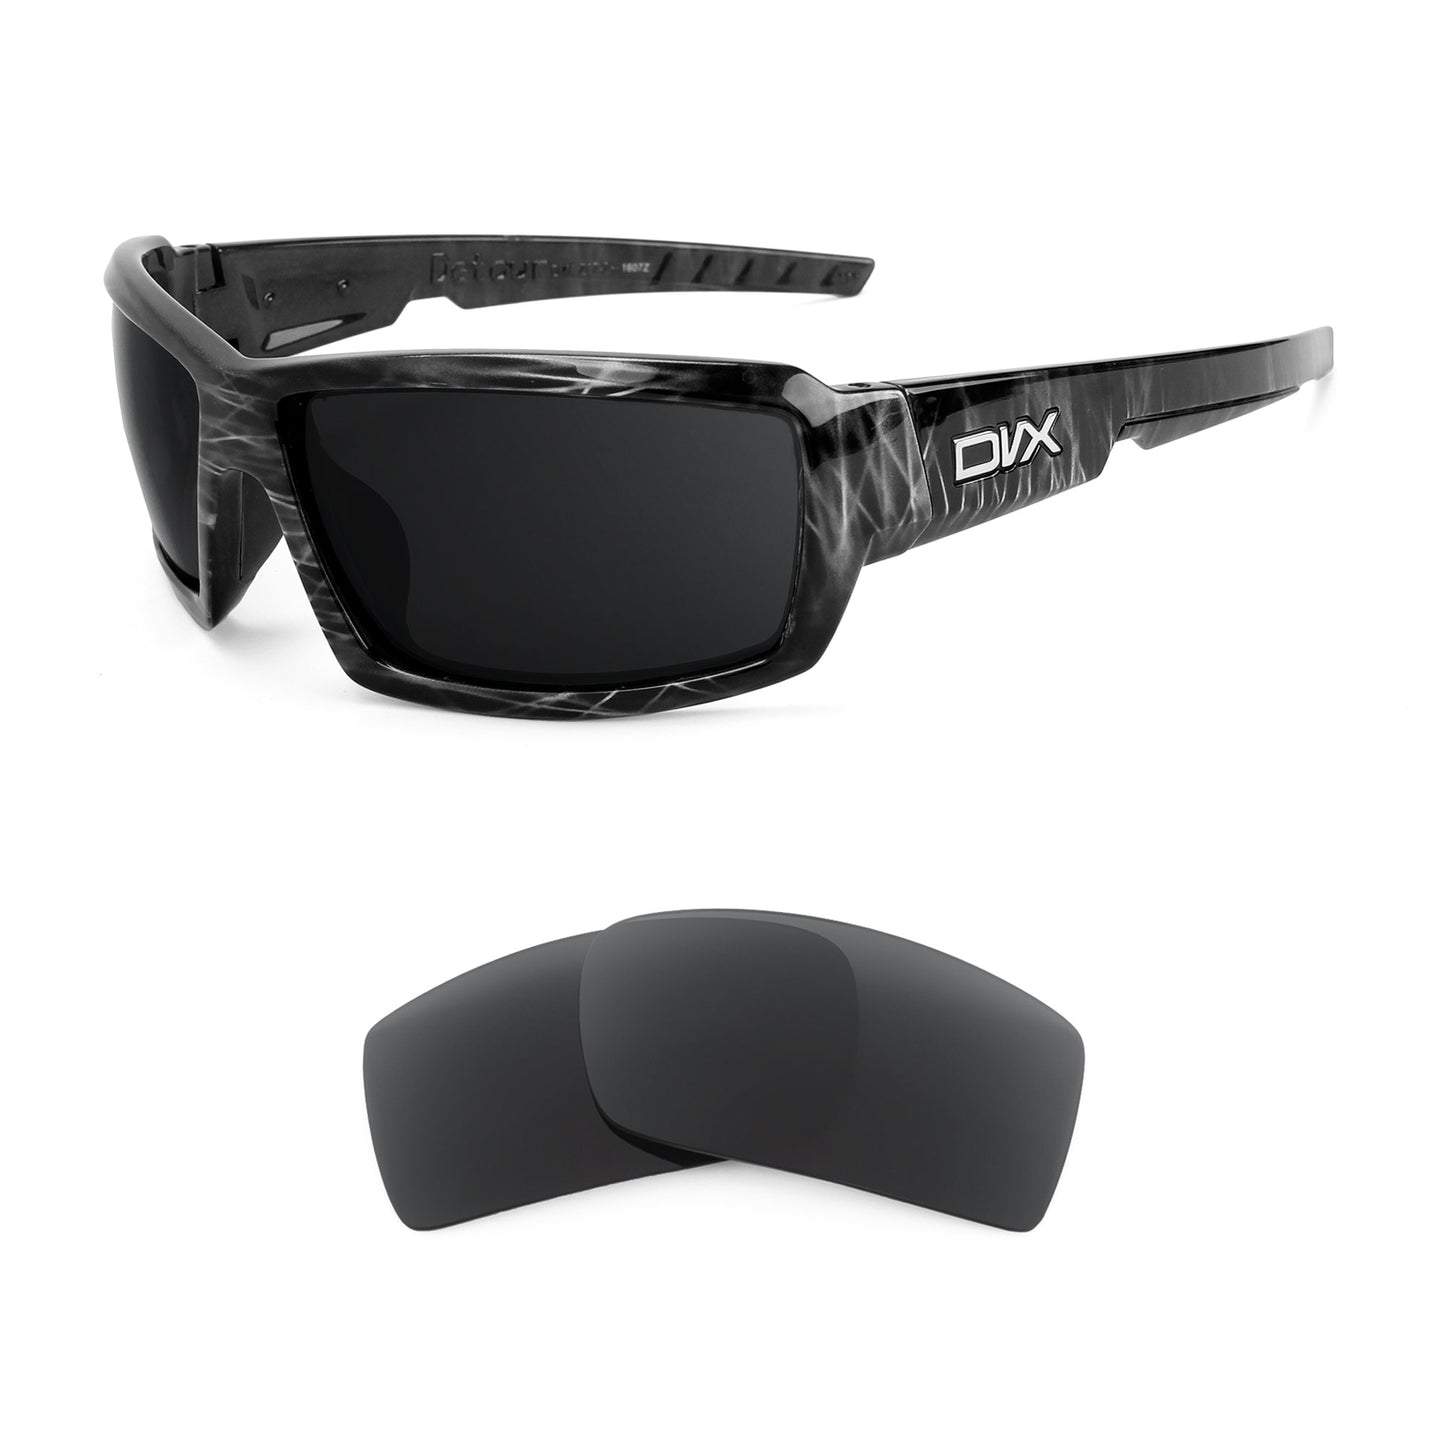 DVX Eyewear Detour sunglasses with replacement lenses